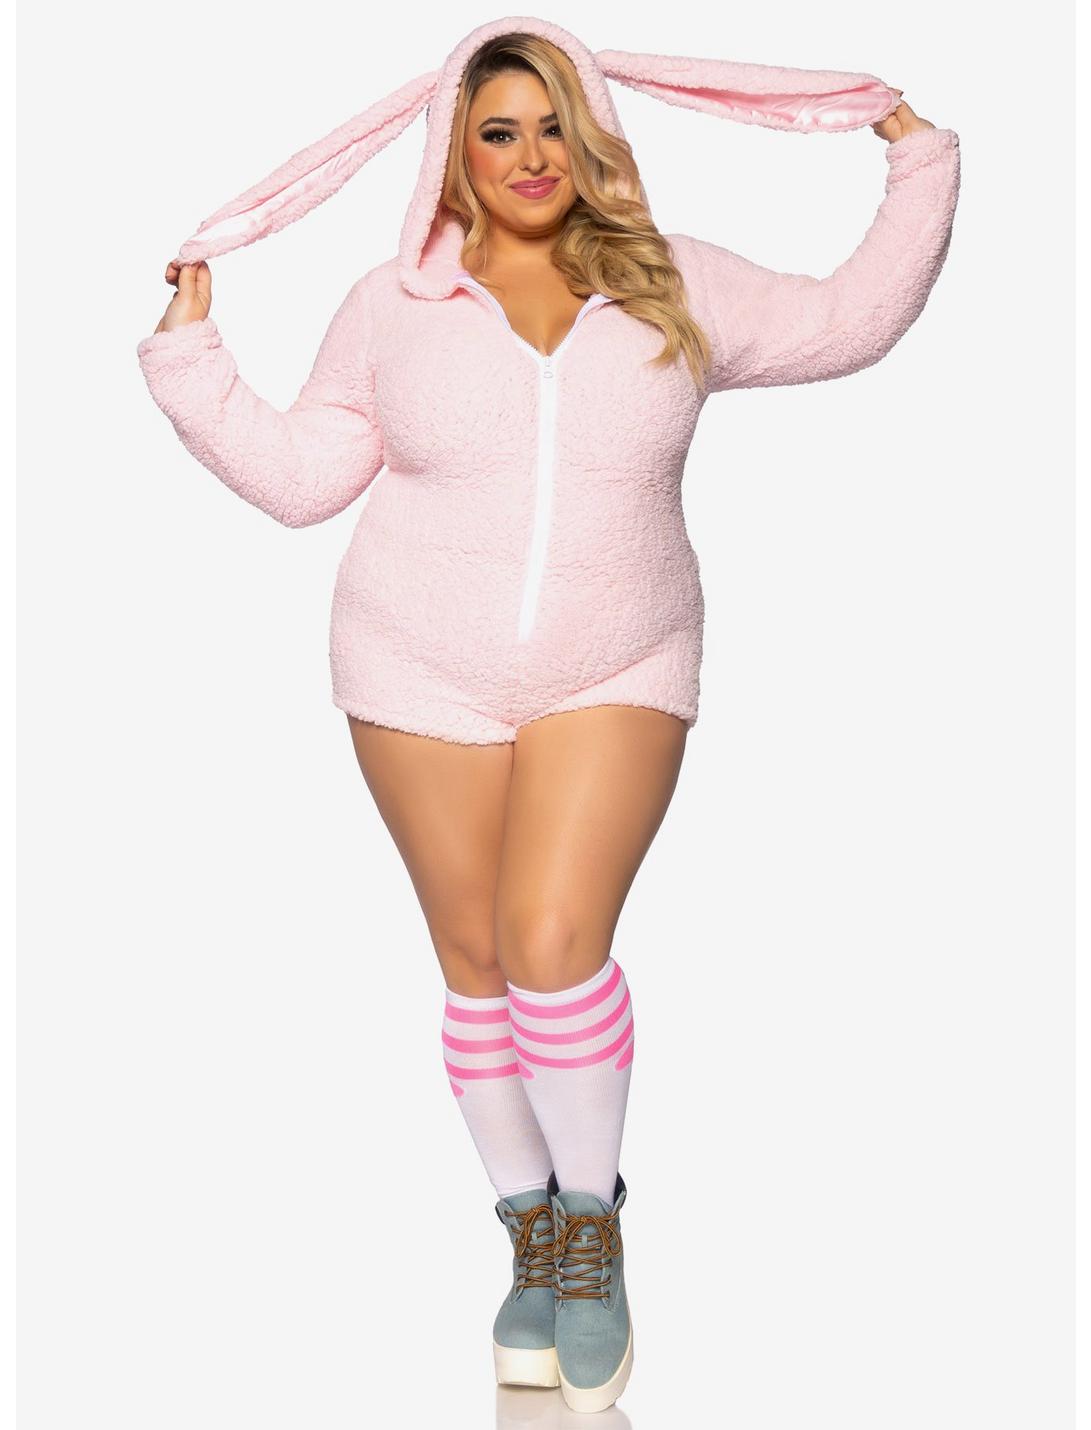 Cuddle Bunny Plus Size Costume, PINK, hi-res